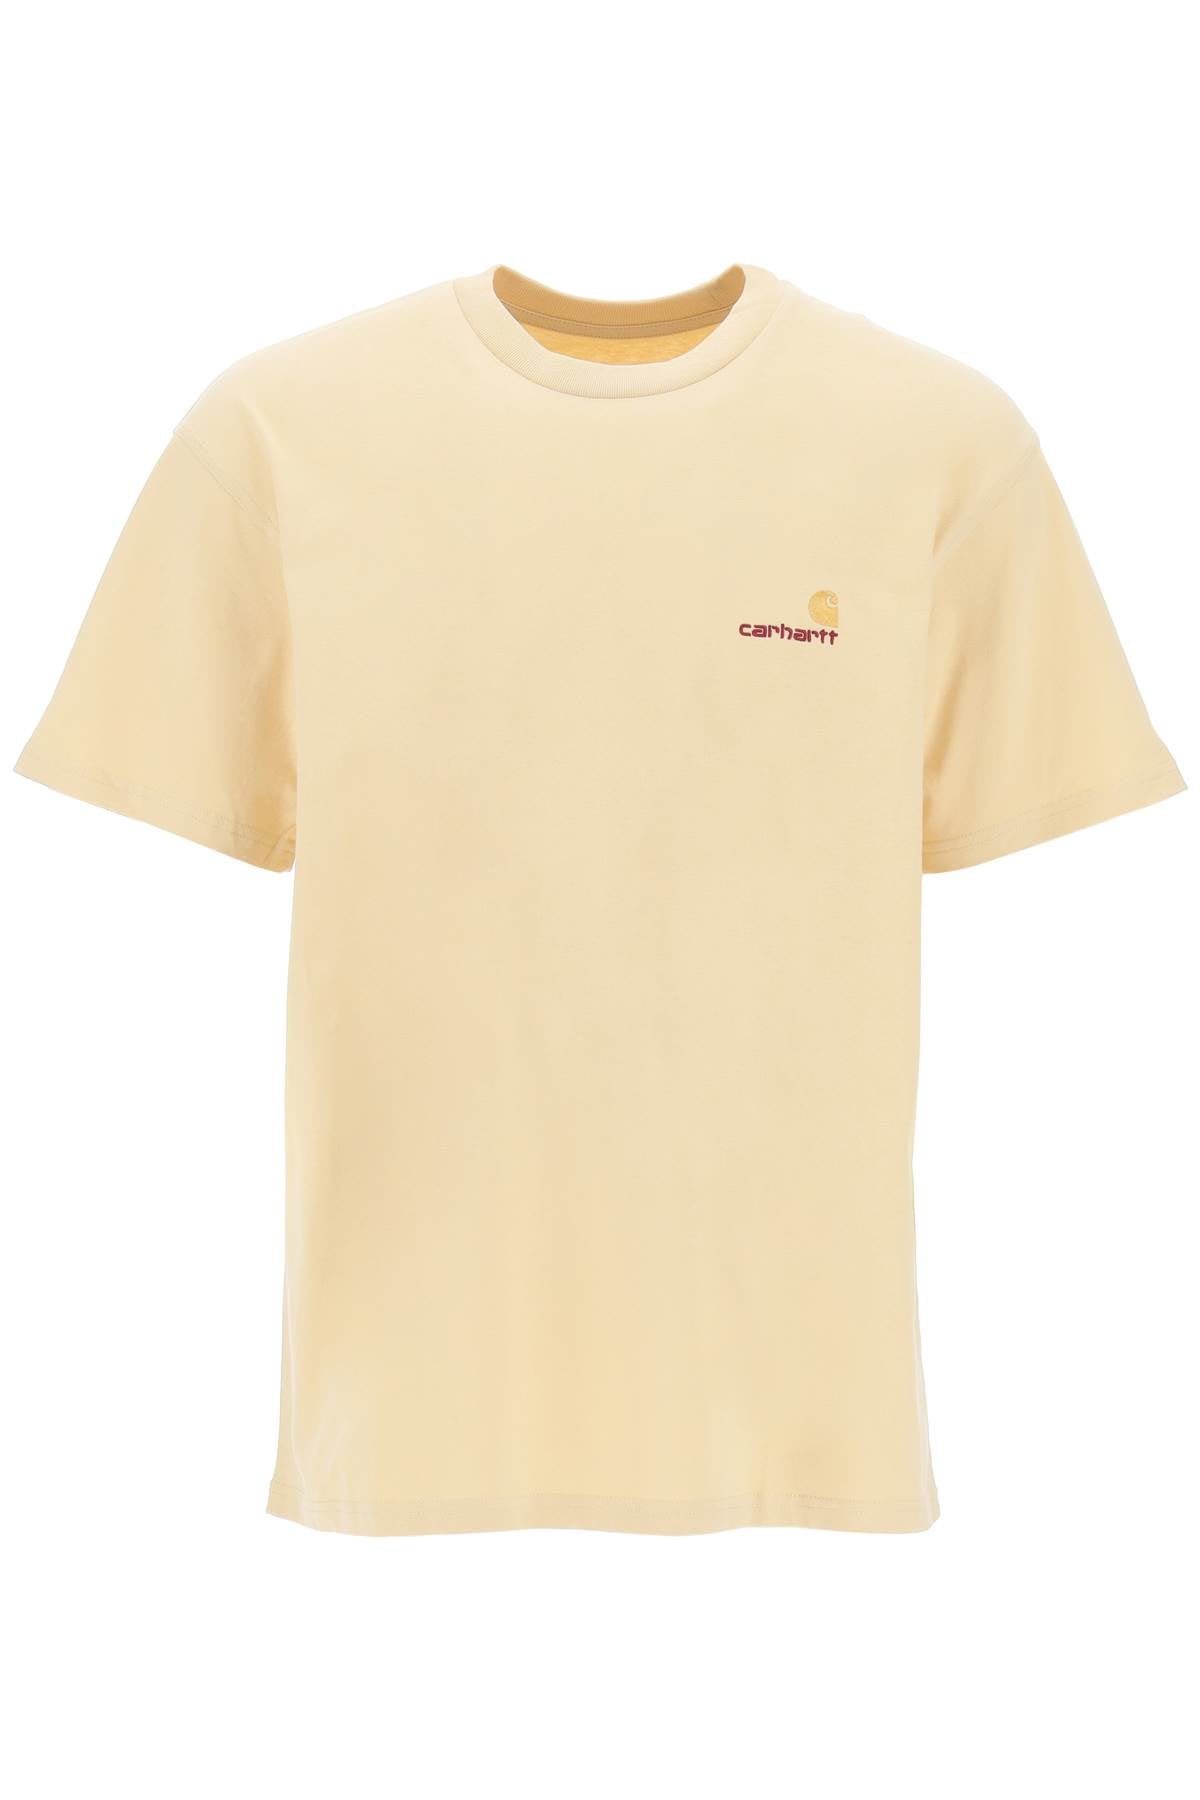 Carhartt wip american script t-shirt-0